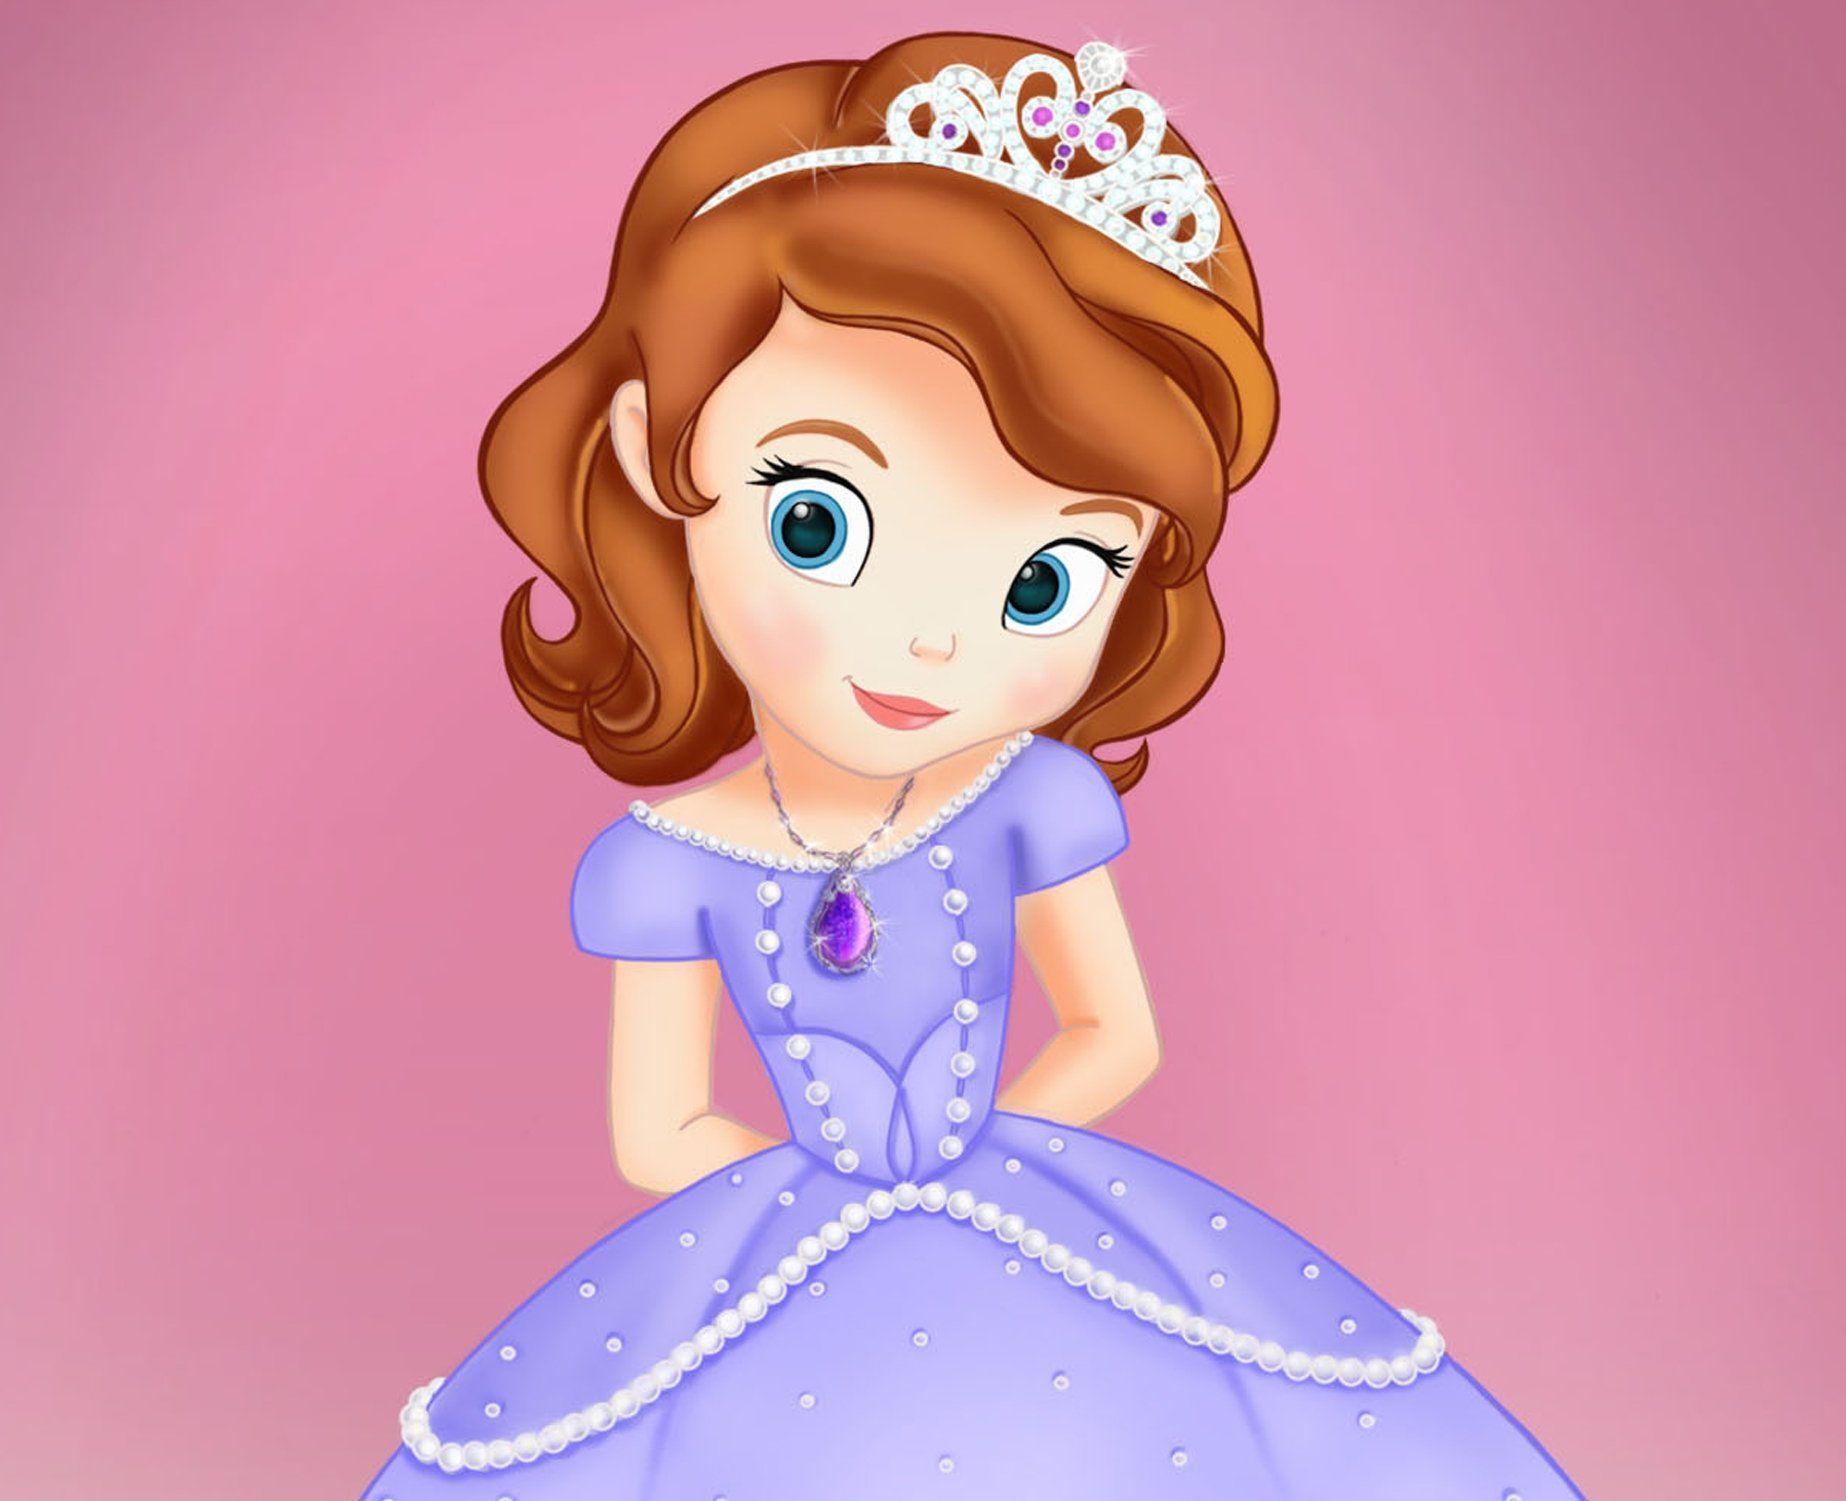 Meet Disney's new princess: Sofia the First